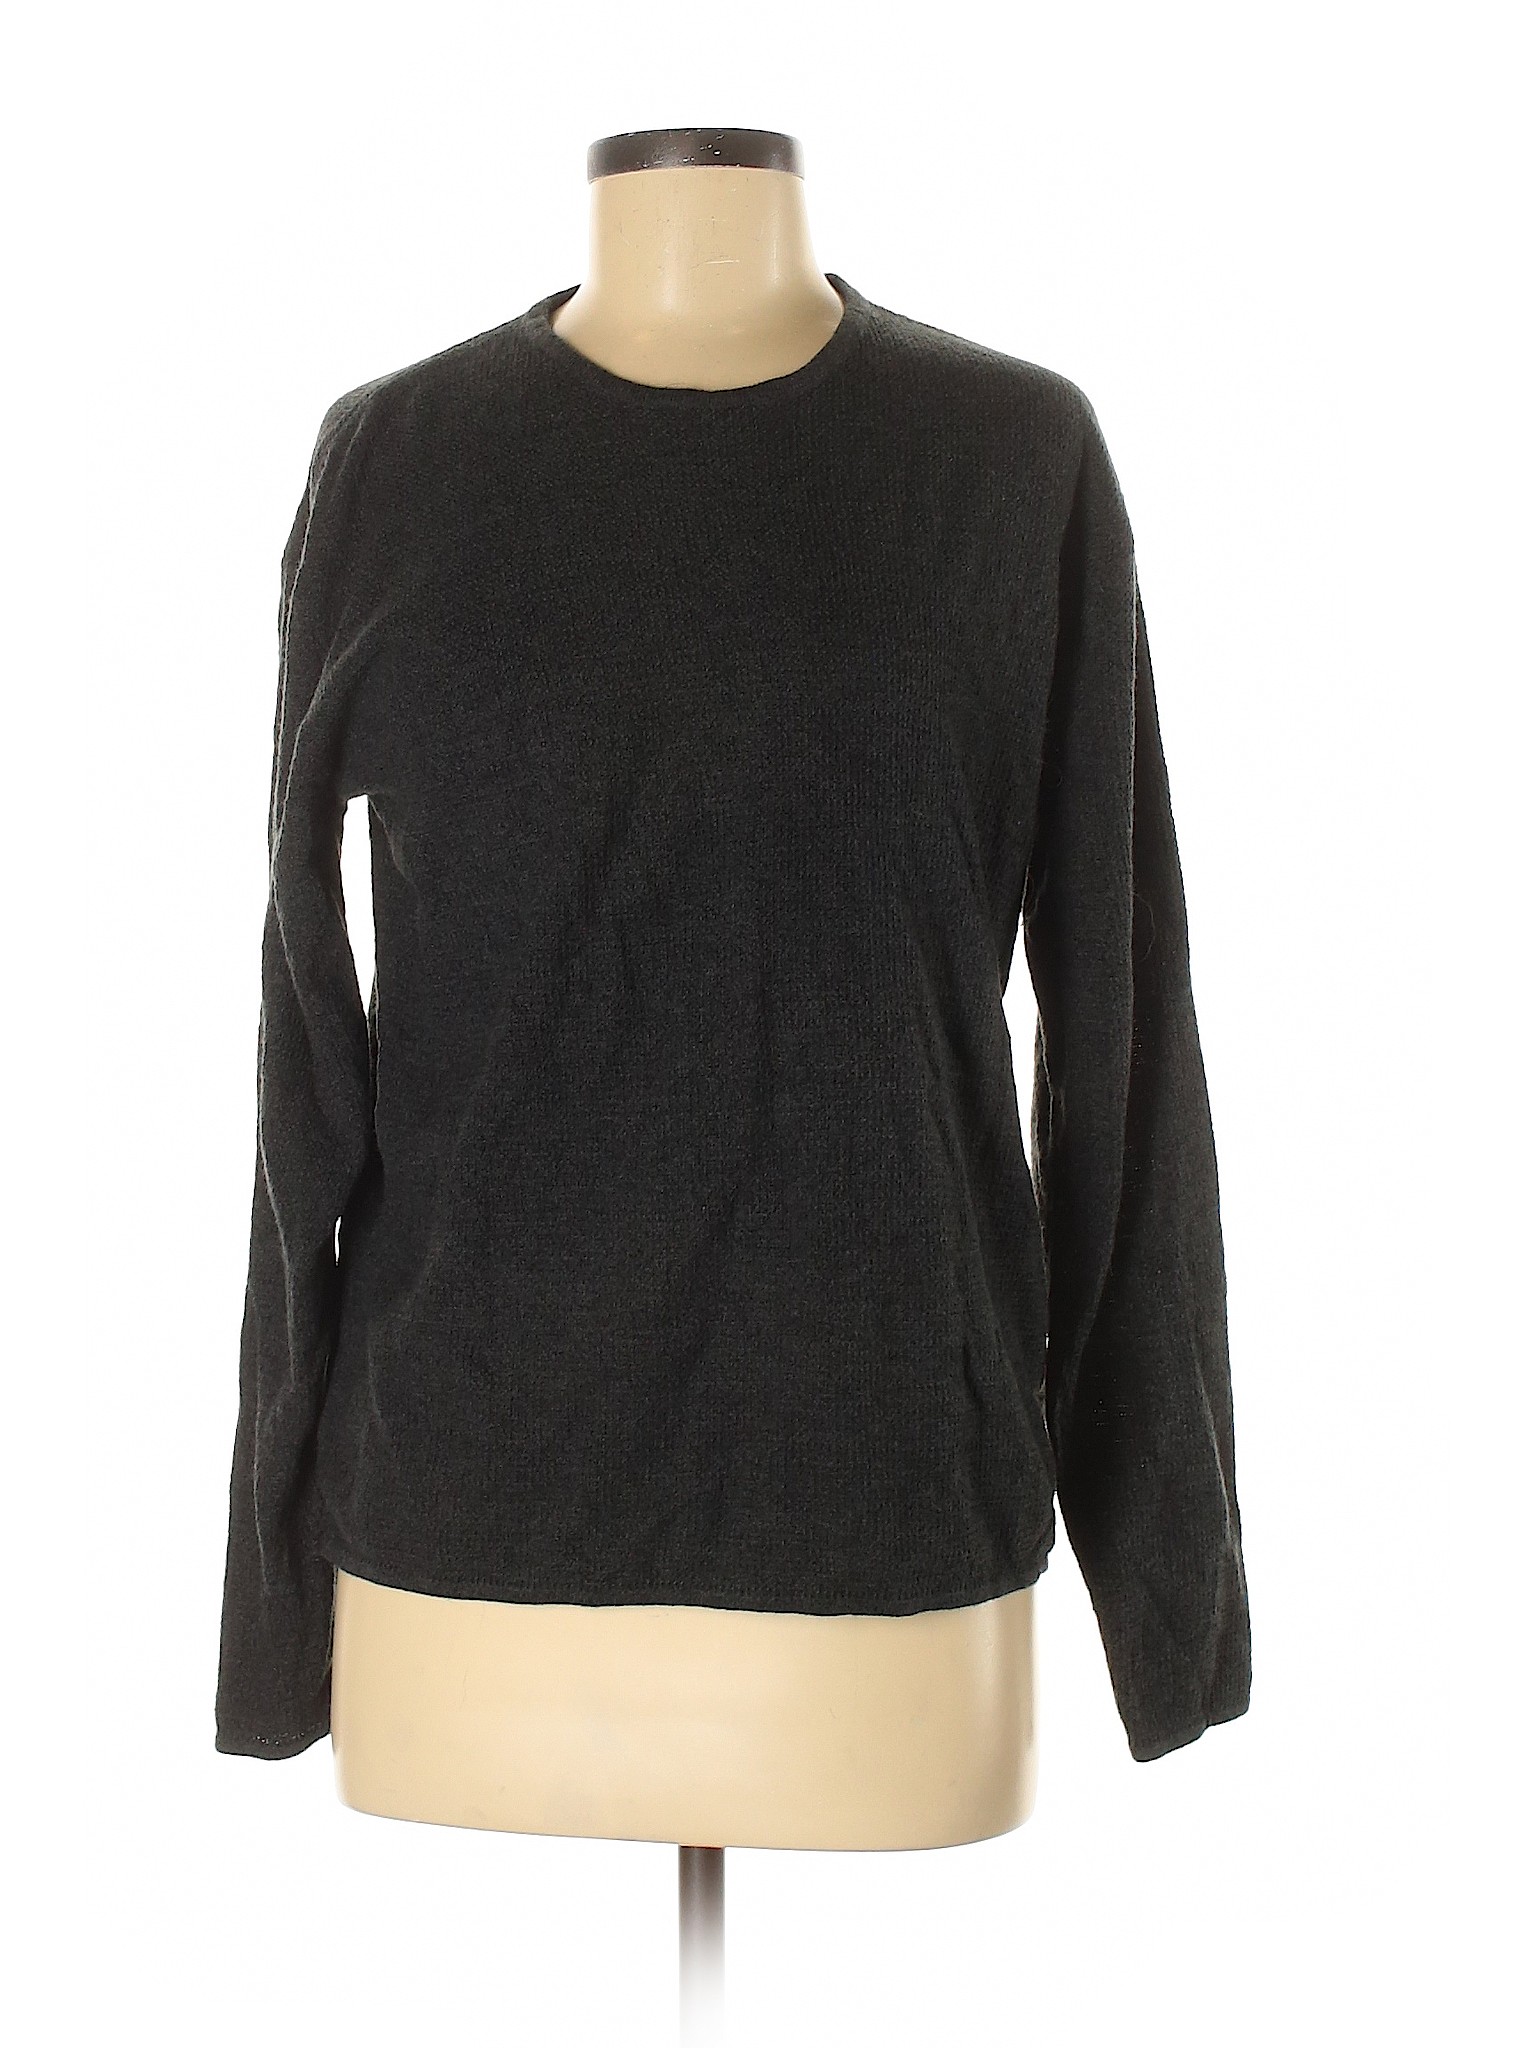 H&M Women Gray Pullover Sweater M | eBay